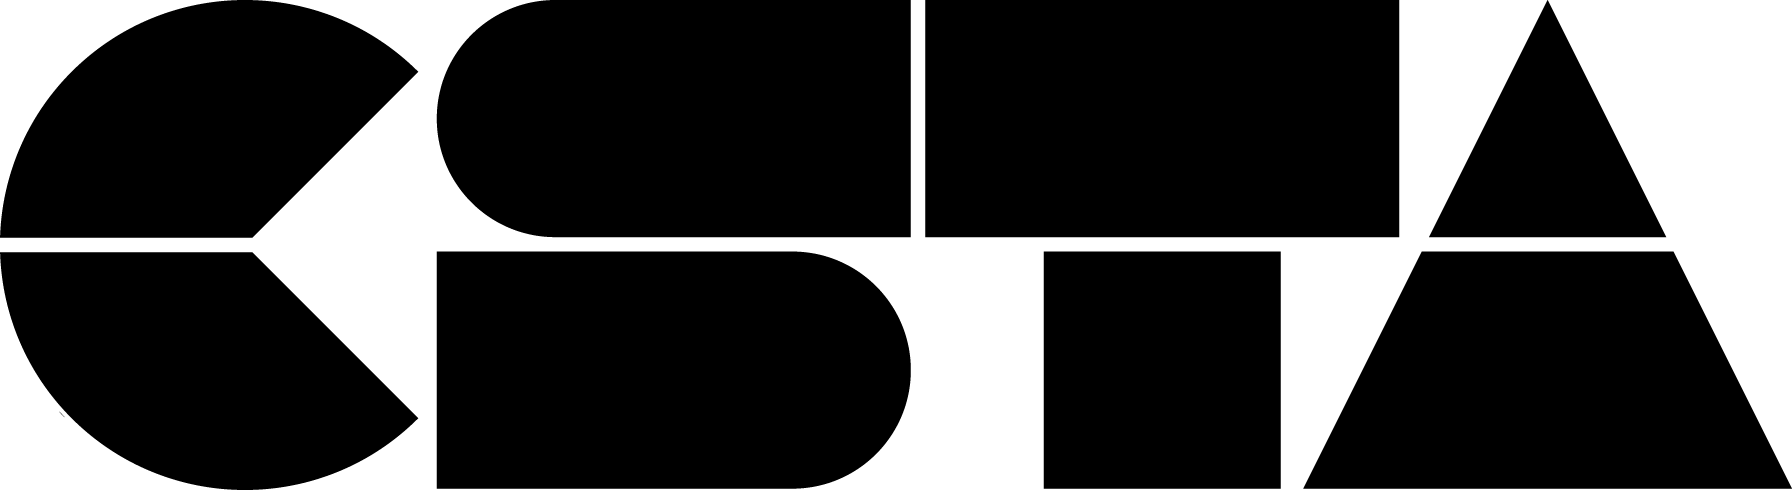 Computer Science Teachers Association logo